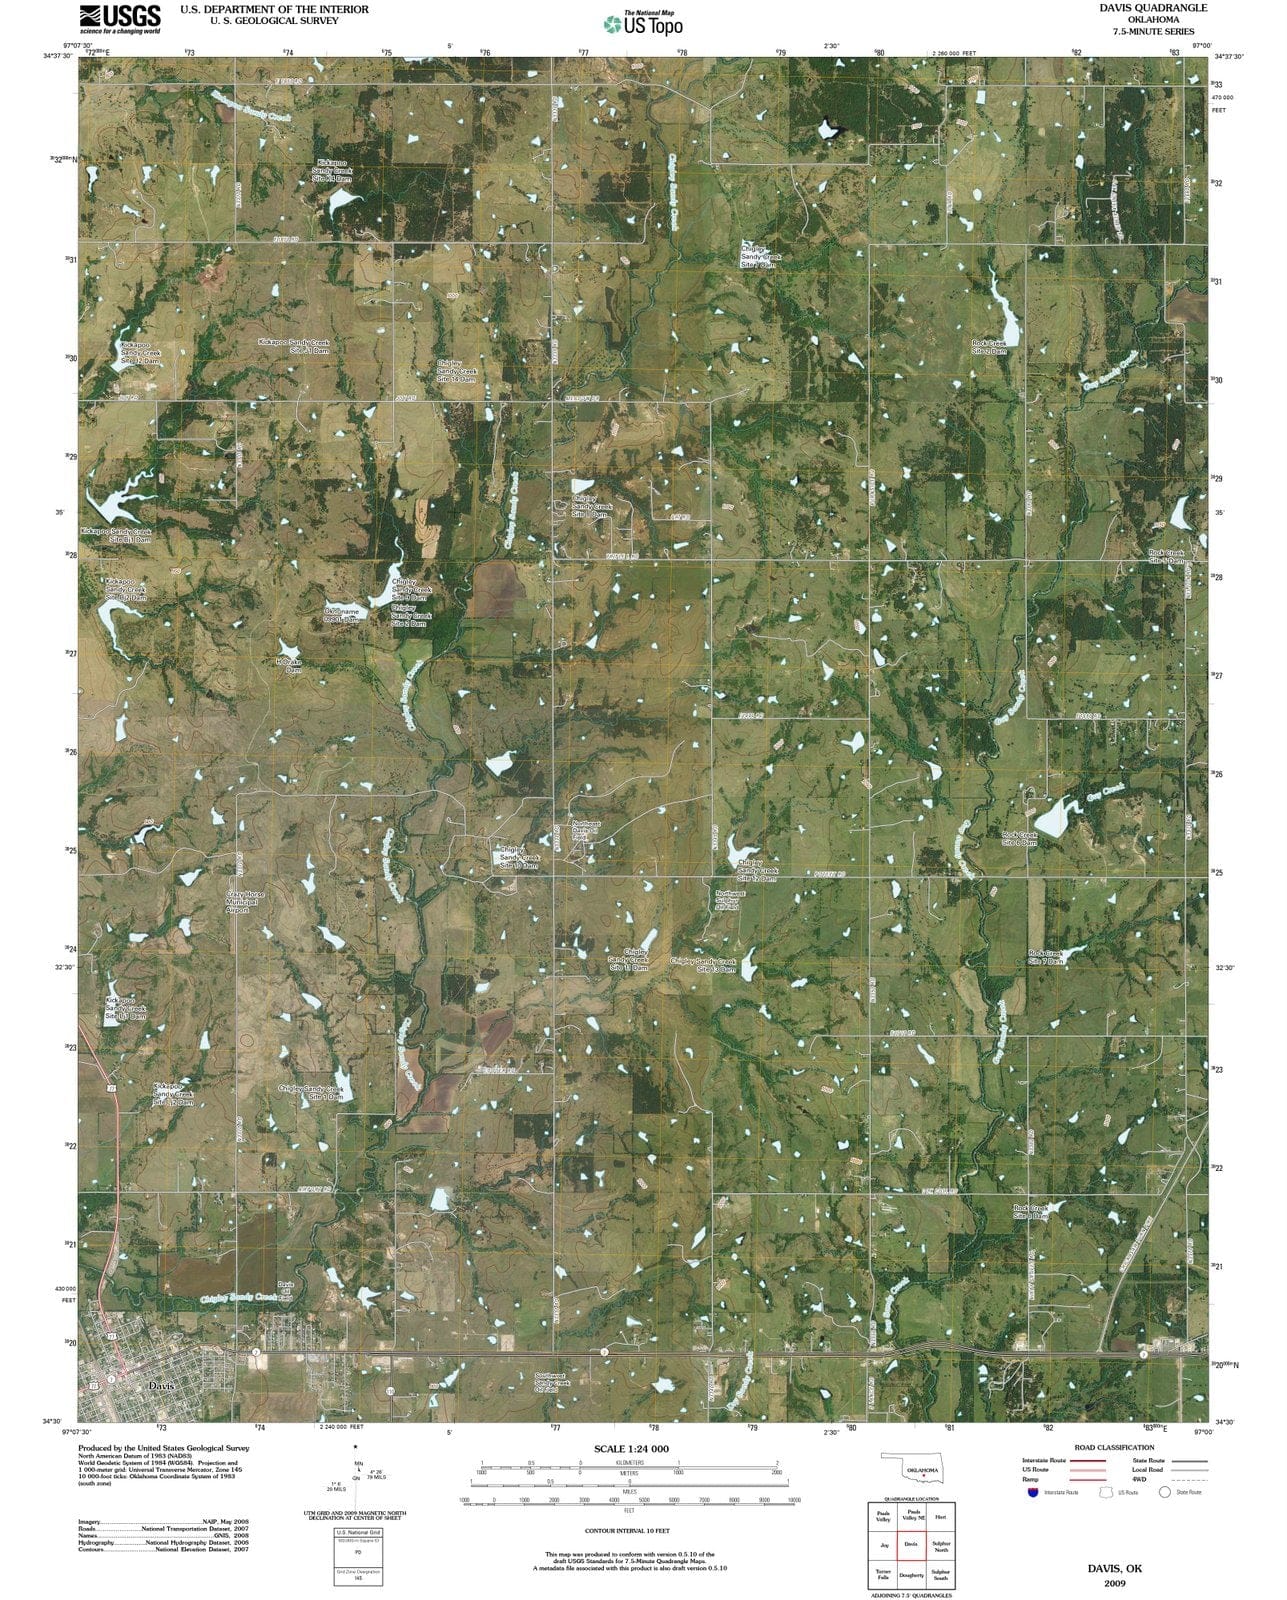 2009 Davis, OK - Oklahoma - USGS Topographic Map